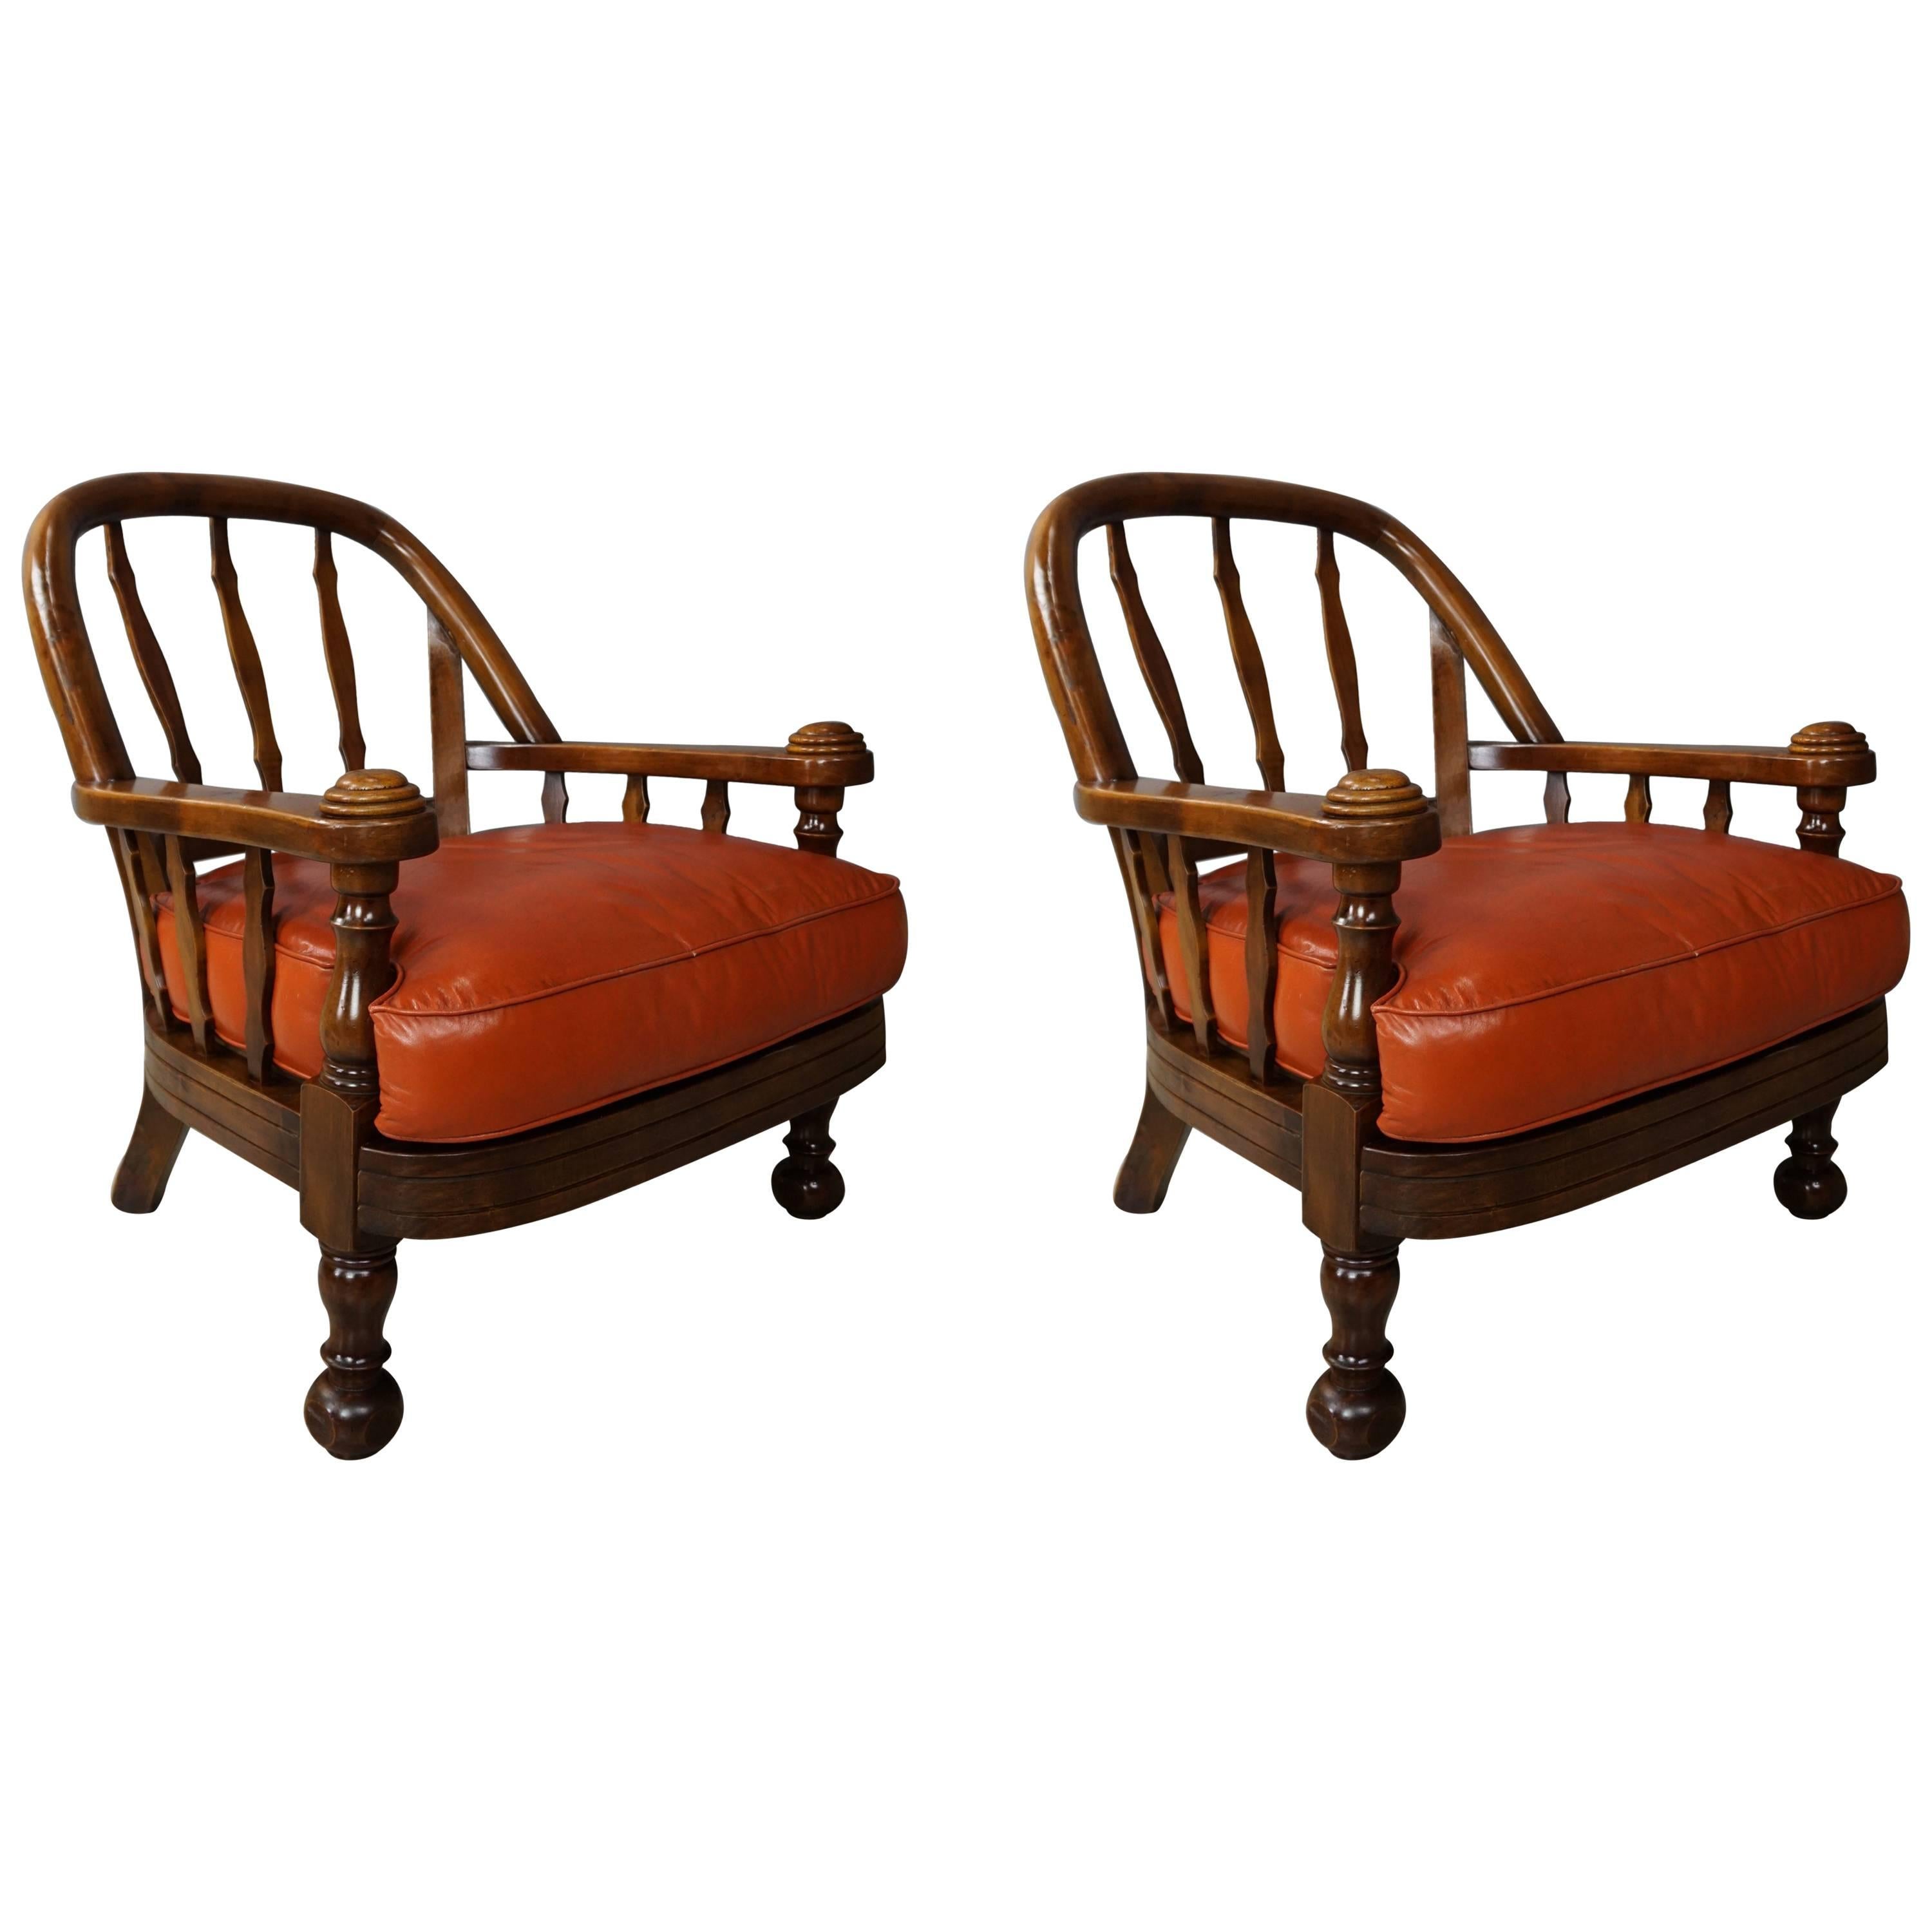 Sessel aus Holz und Leder, Paar